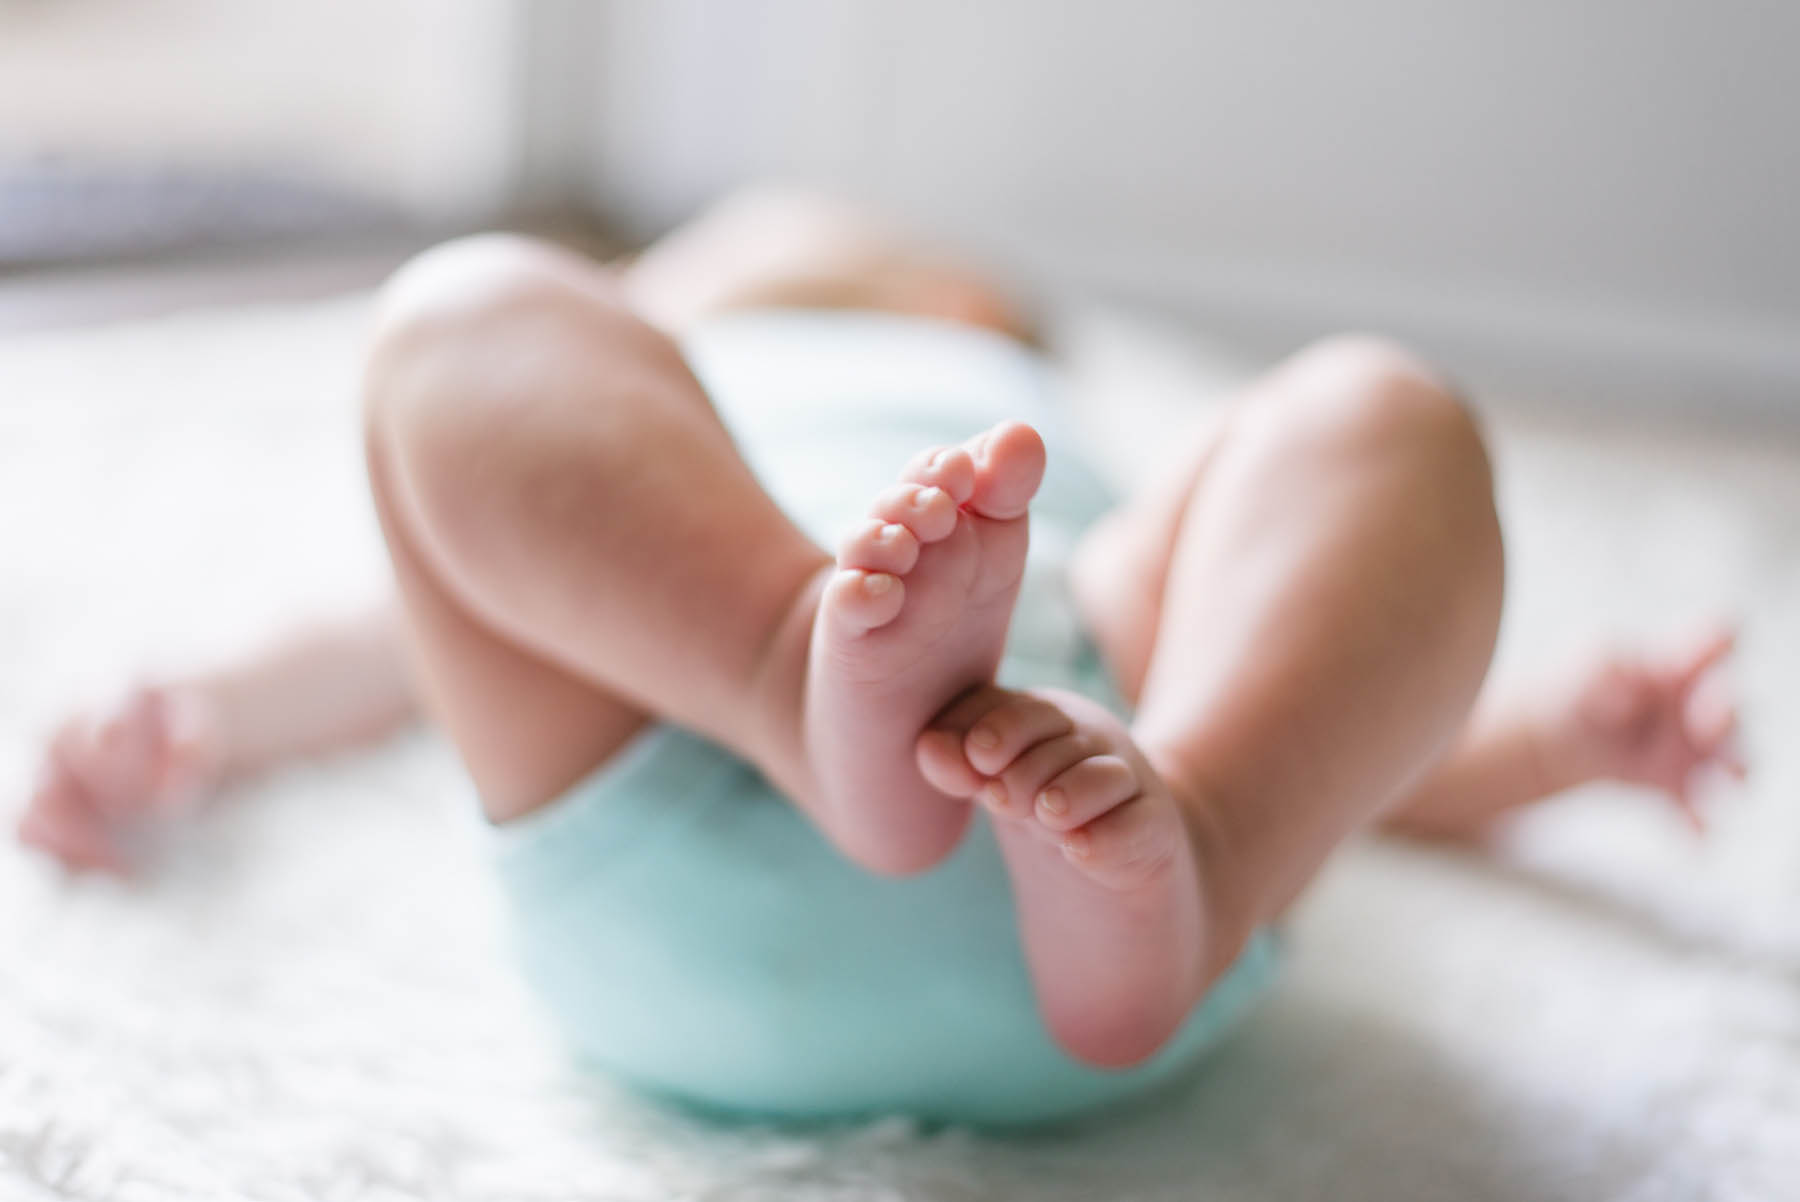 Minimalist Baby Registry